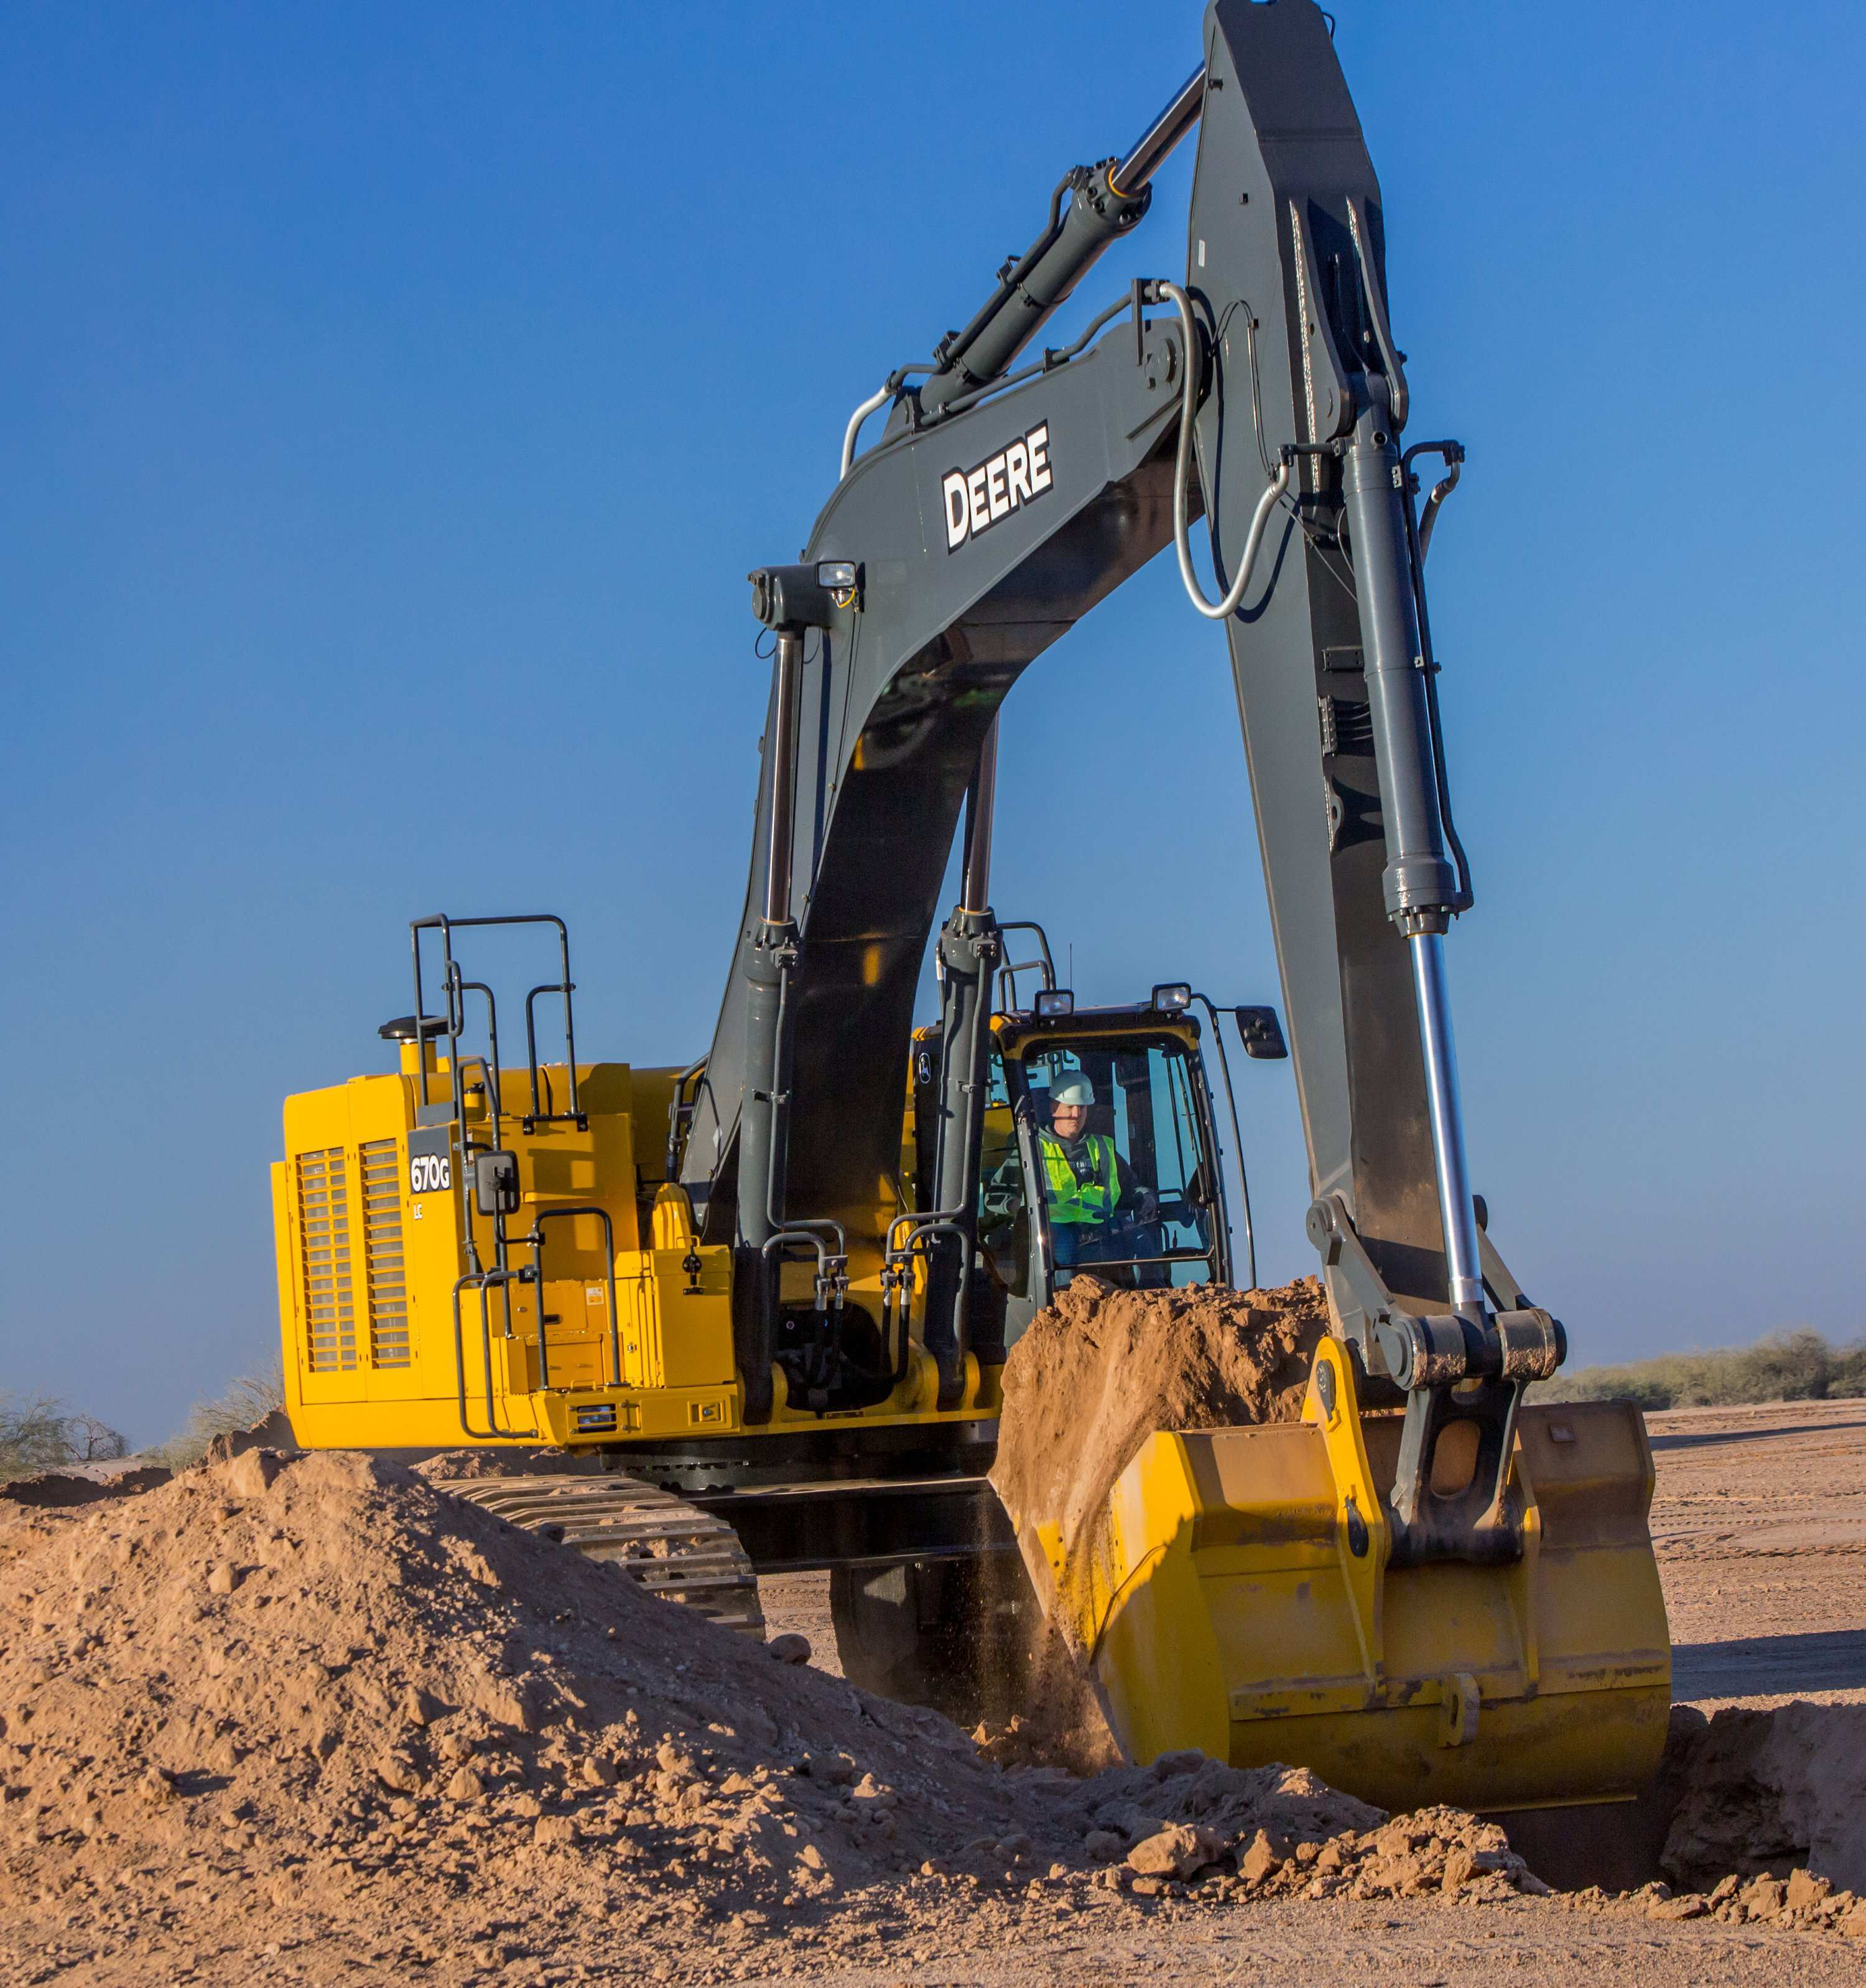 John Deere updates 670G LC excavator with improved hydraulics